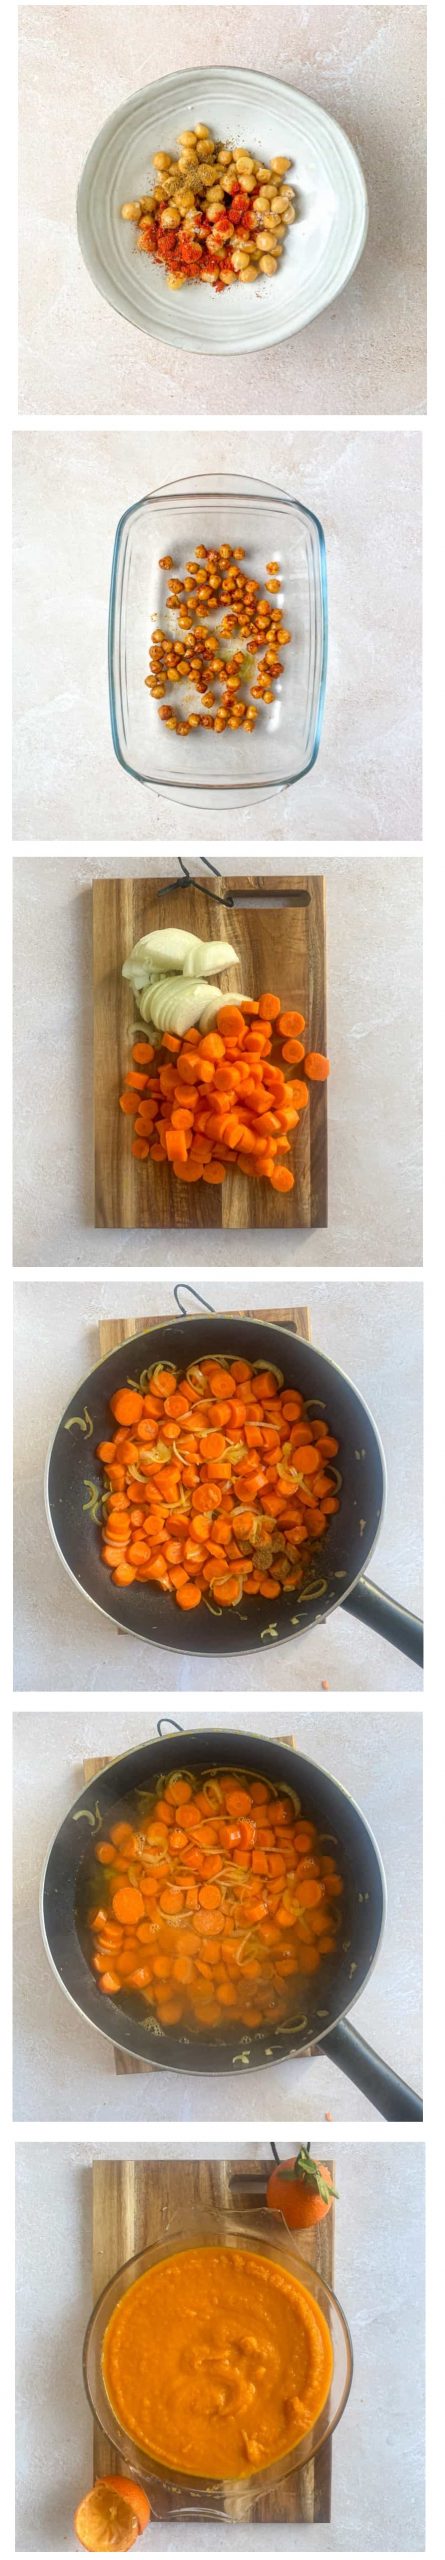 Sopa de zanahoria y mandarina con garbanzos asados